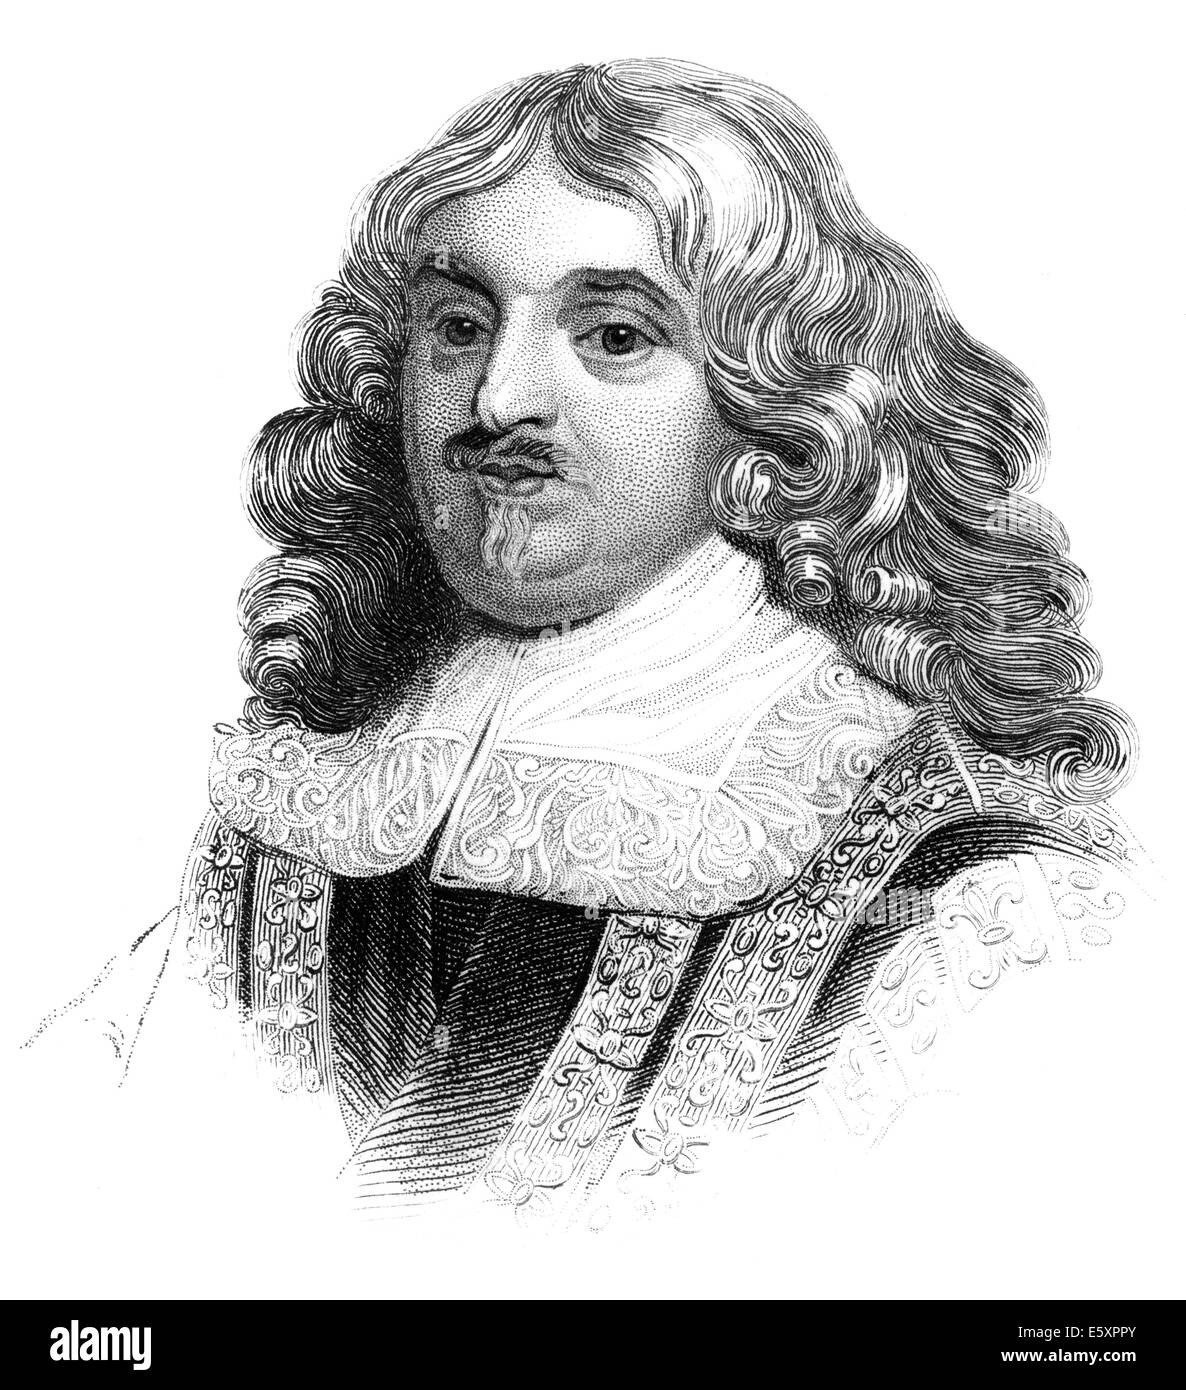 Edward Hyde, 1st Earl of Clarendon, 1609-1674, an English statesman, historian, Stock Photo